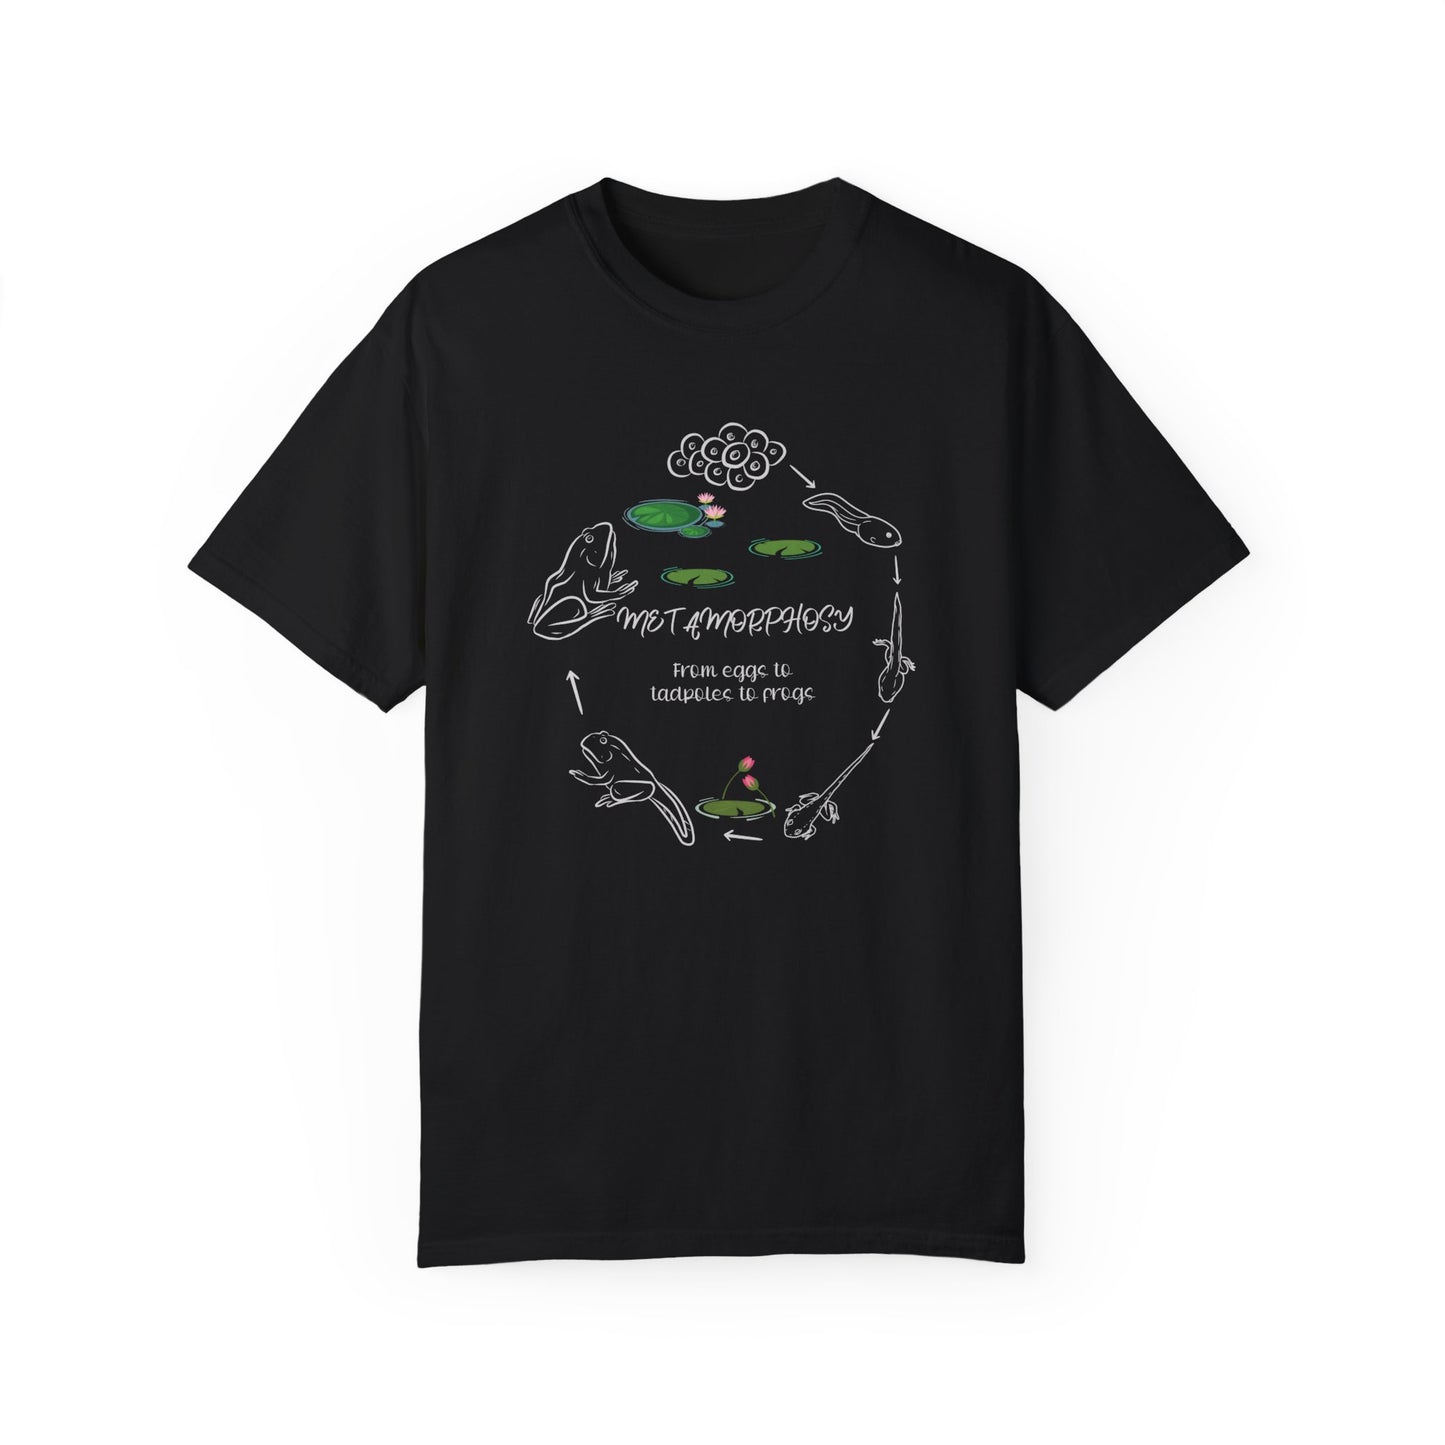 Frog in Metamorphosis T-shirt, Comfort Colors T-shirt for Animal Lovers